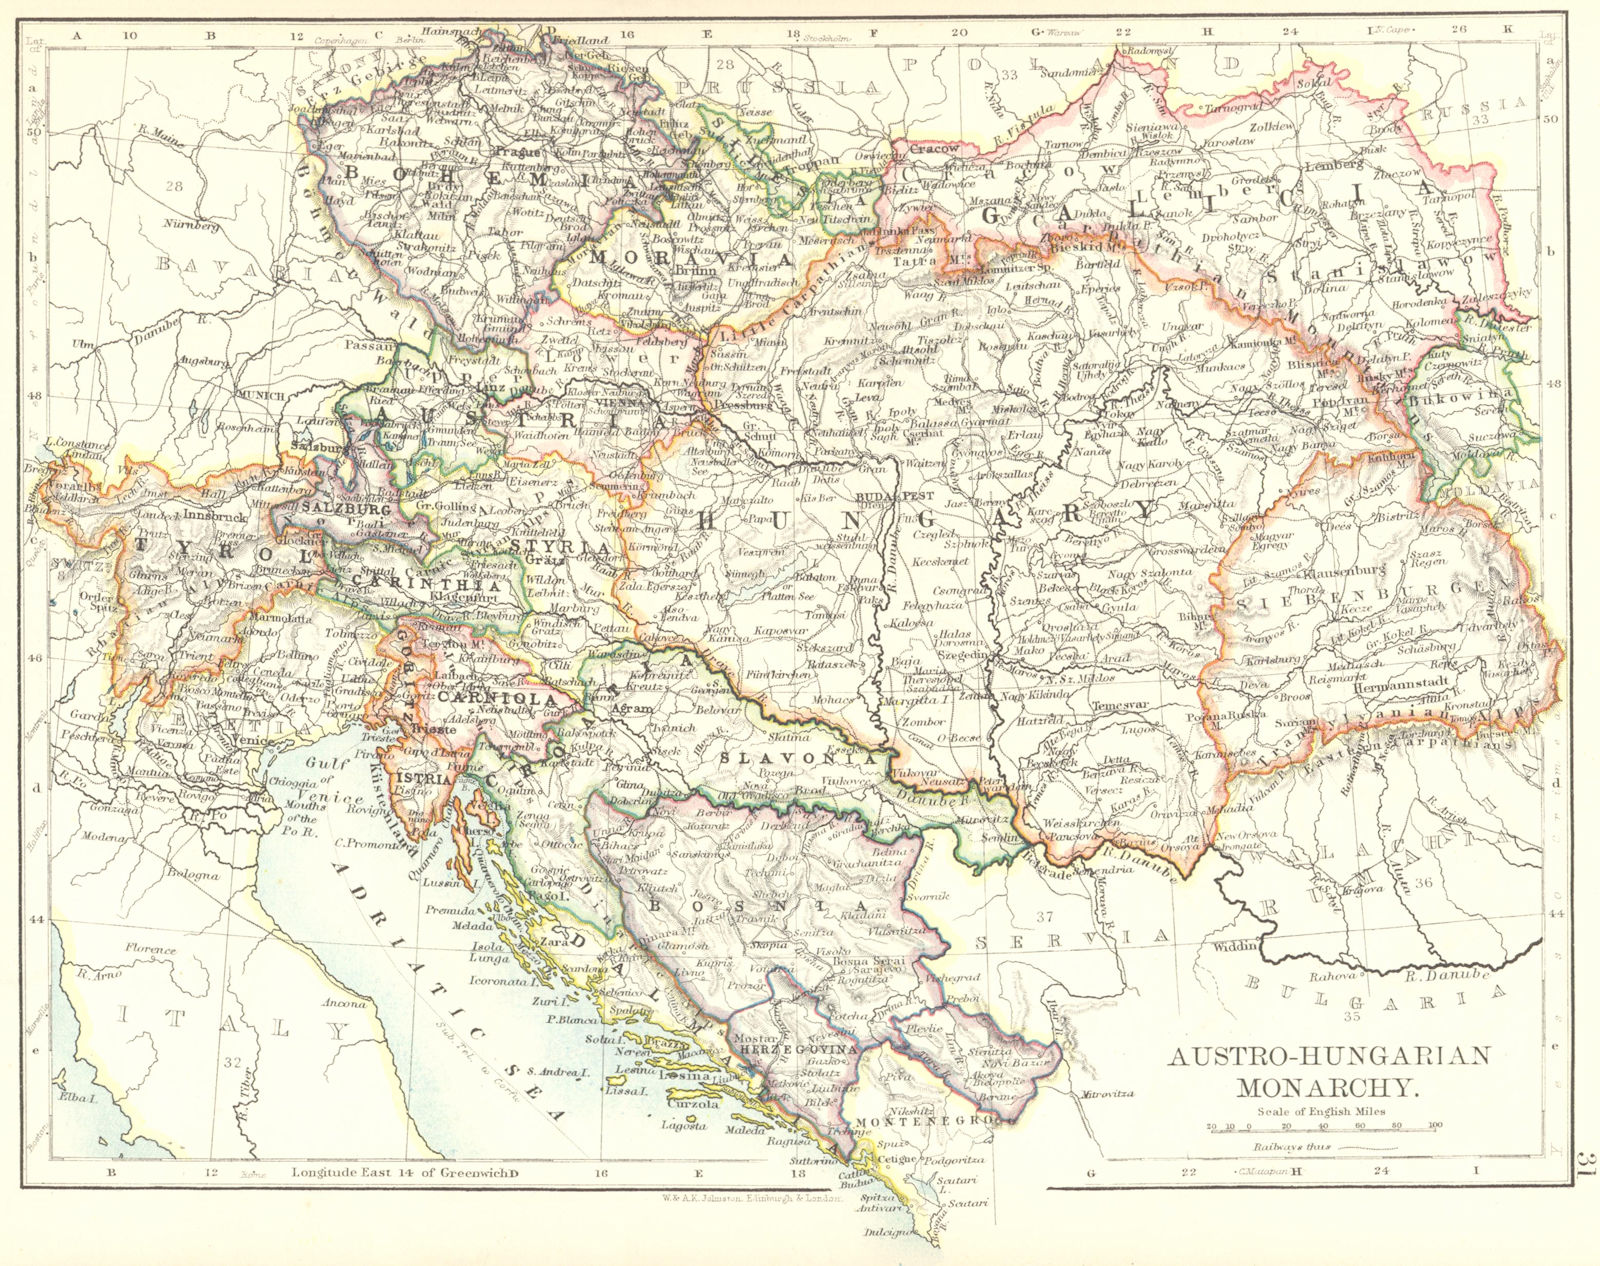 AUSTRO-HUNGARIAN MONARCHY. Dalmatia Slavonia Siebenburgen &c. JOHNSTON 1899 map